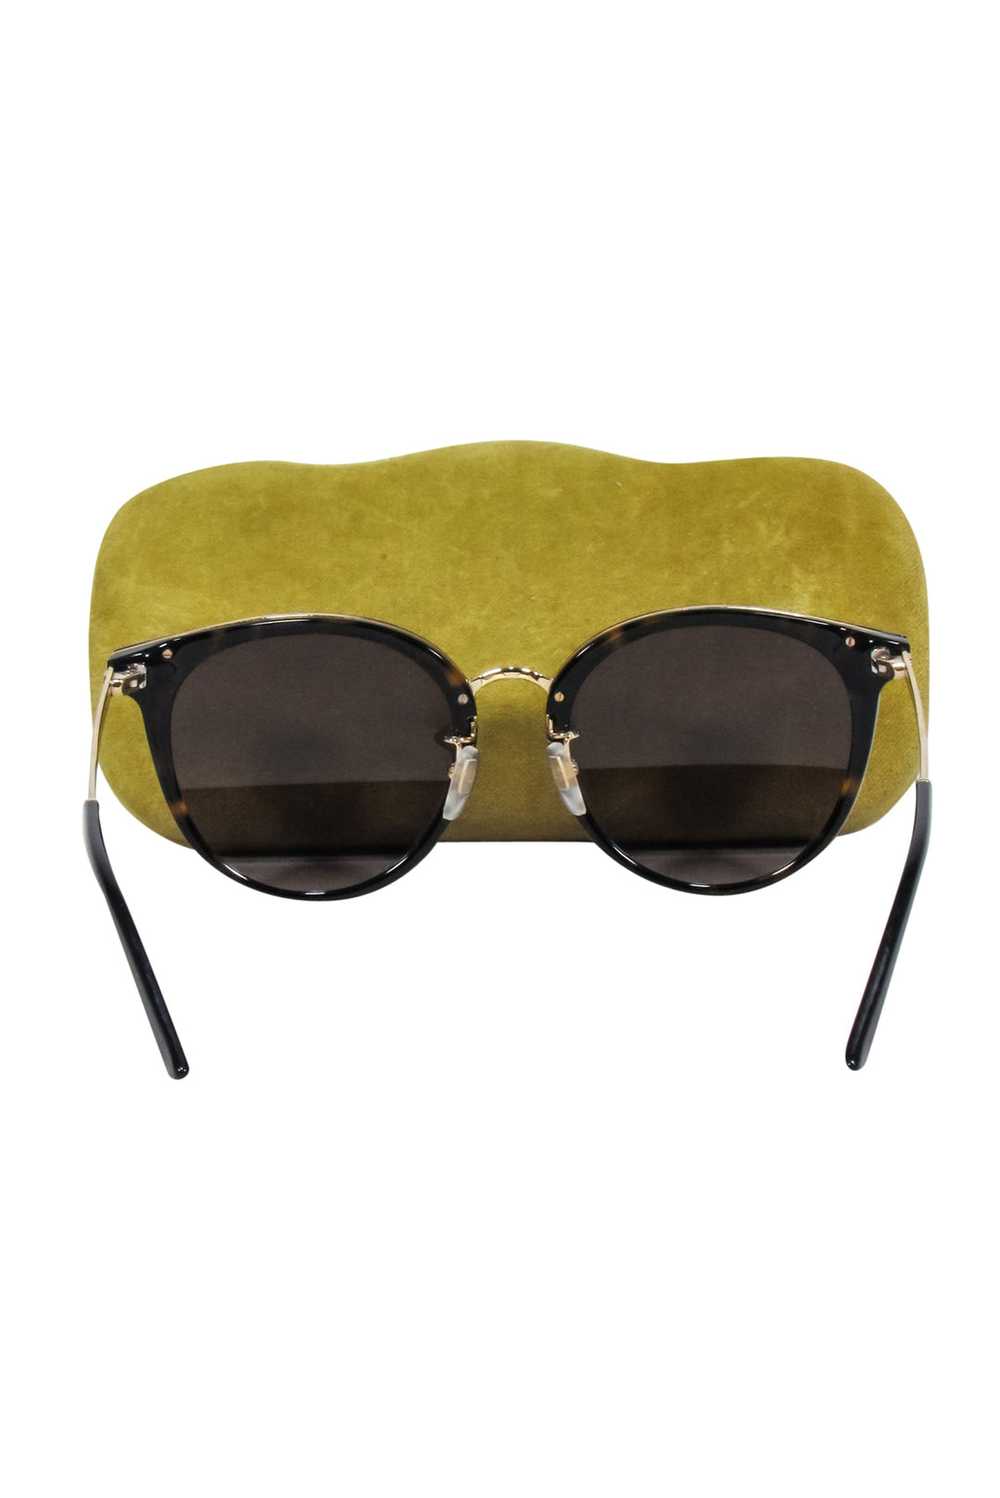 Gucci - Brown Tortoise Oversized Round Sunglasses - image 4